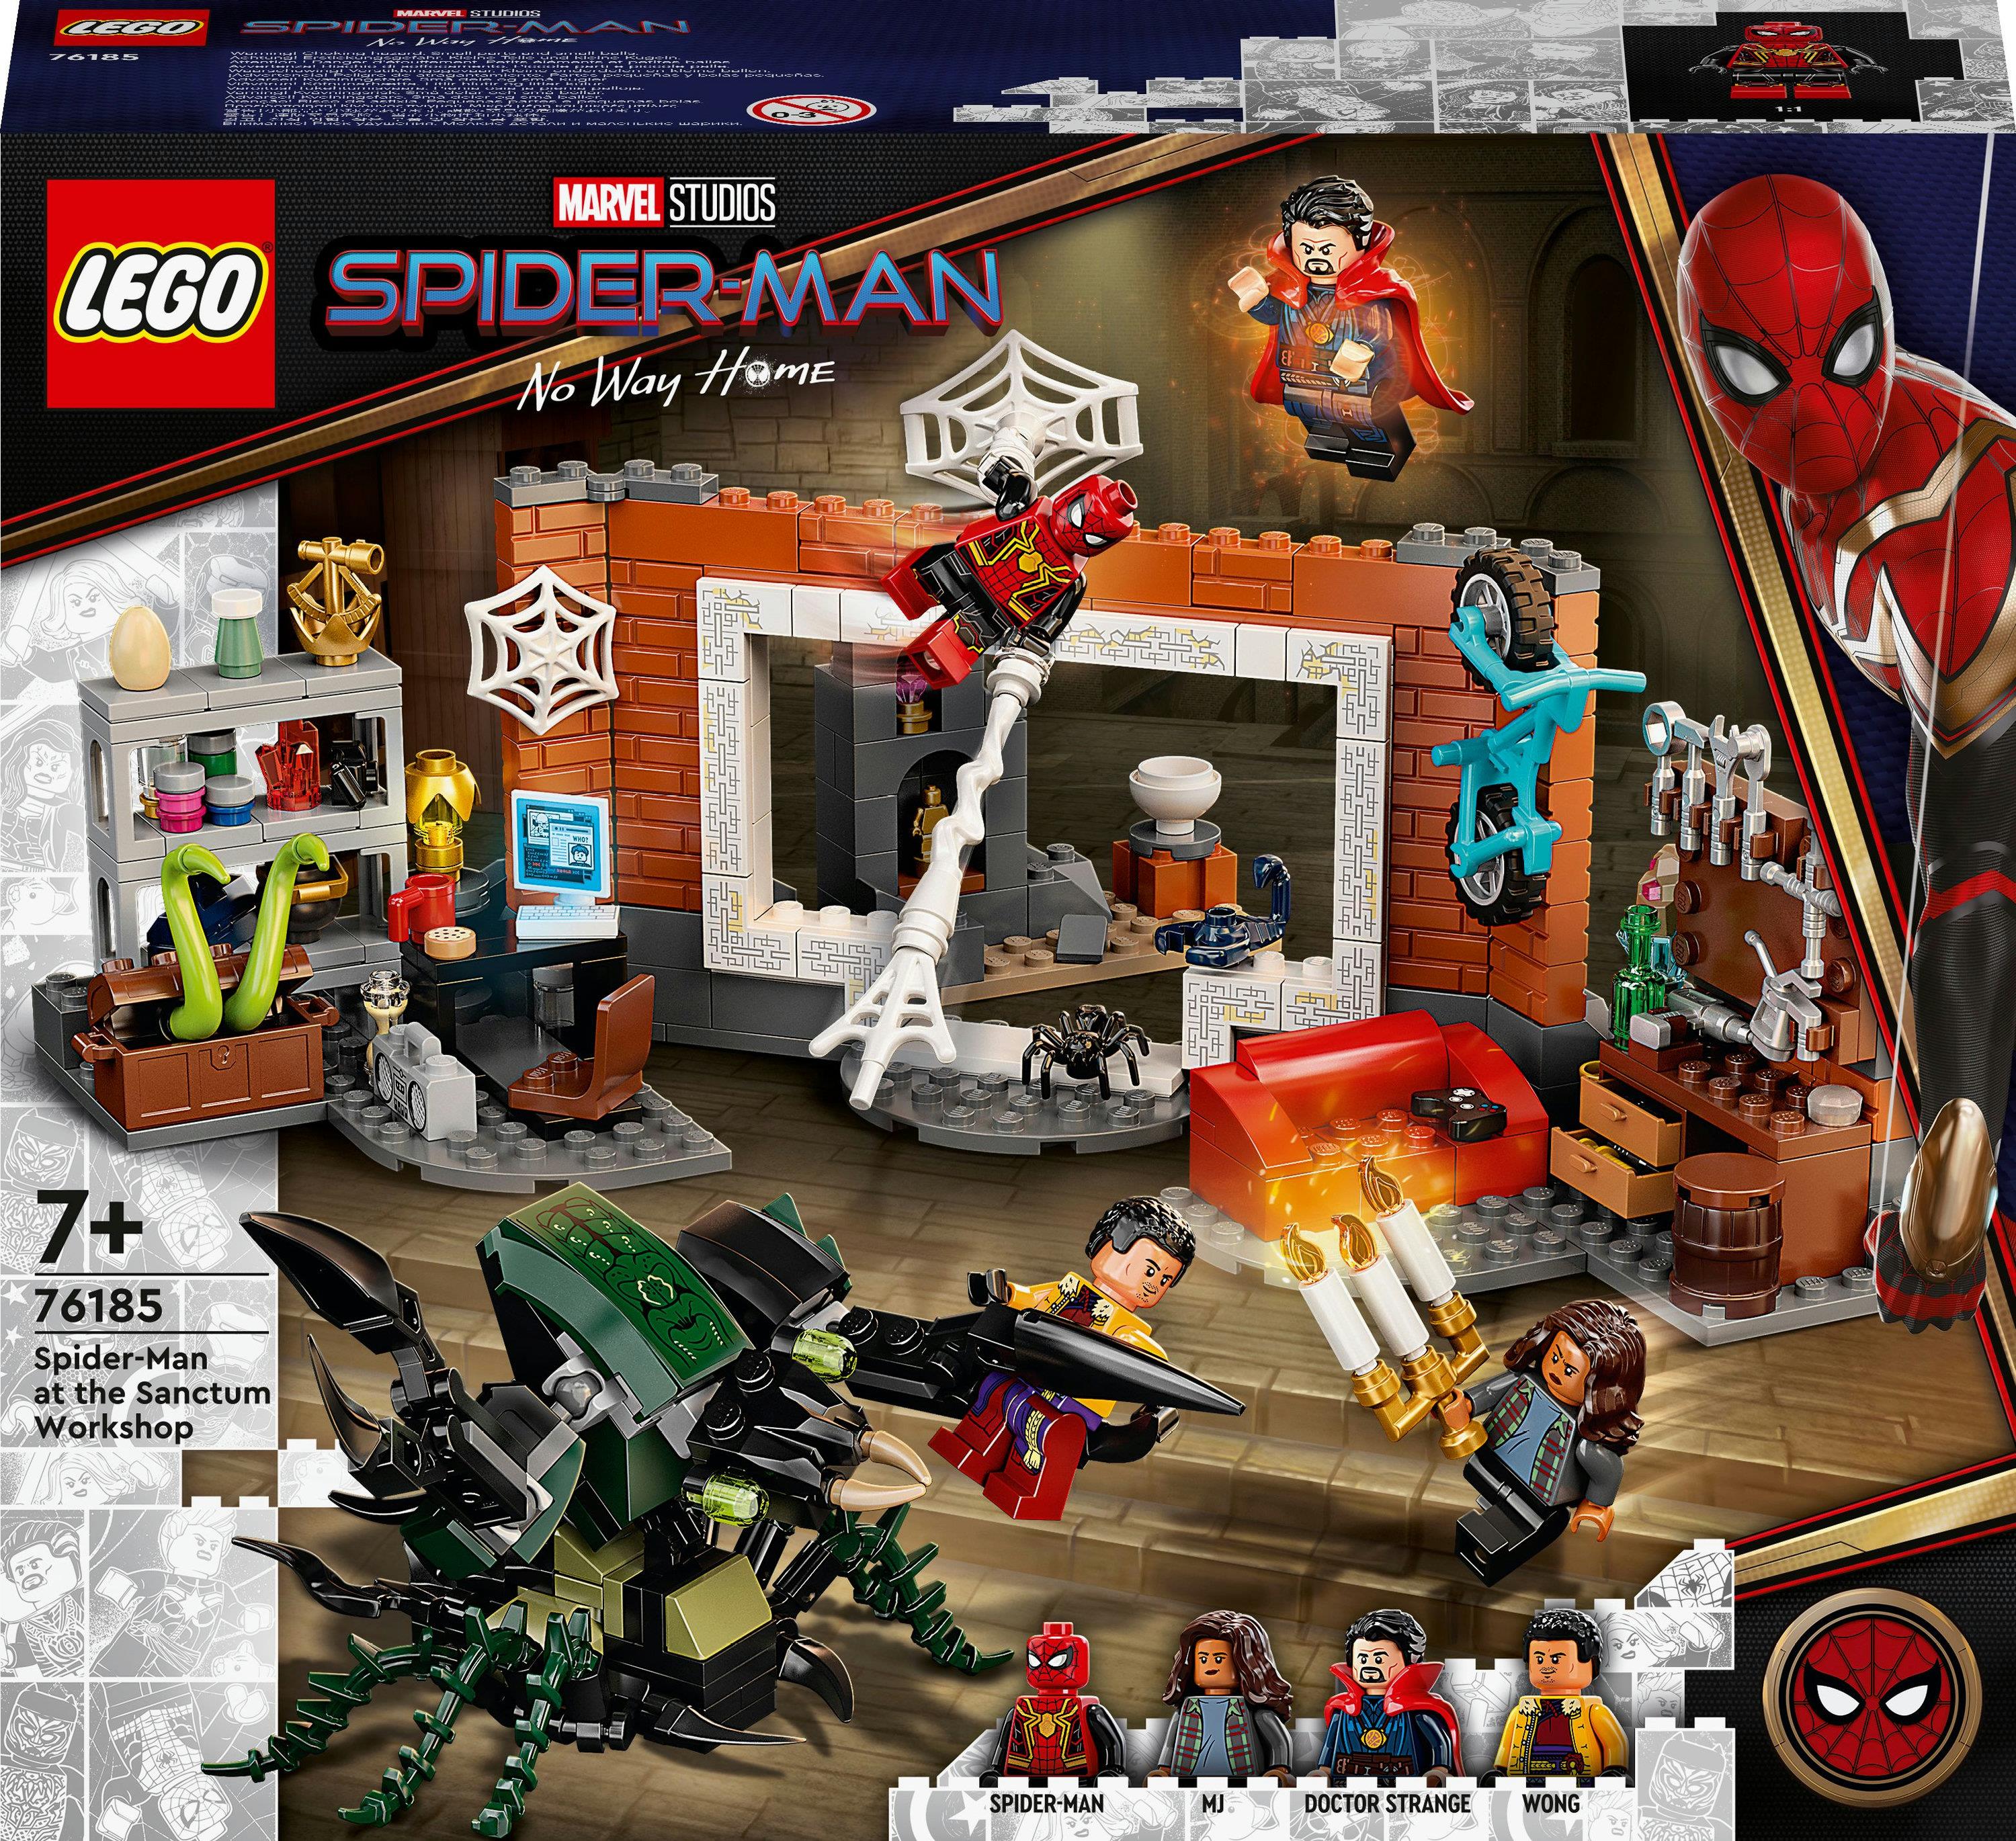 LEGO Super Heroes Spider-Man